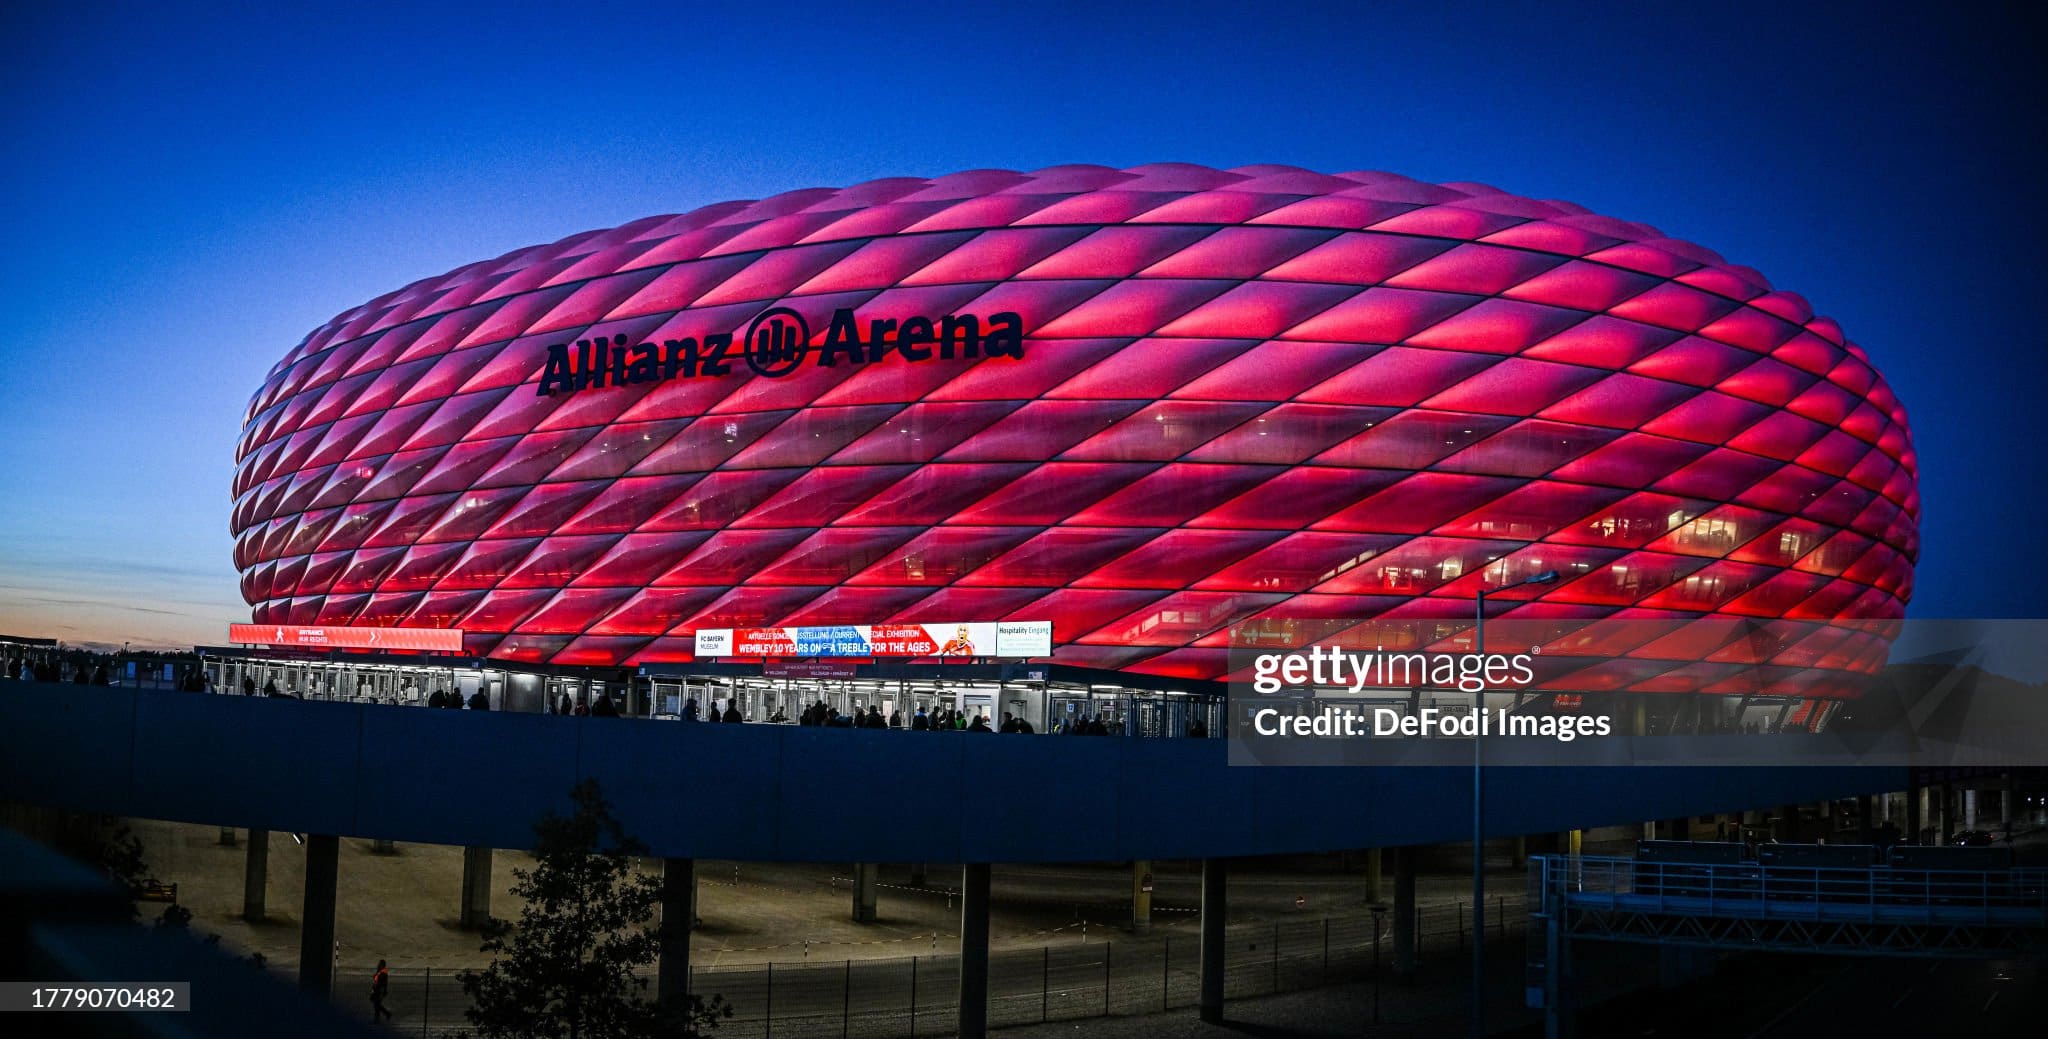 Champions league Bayern stadium